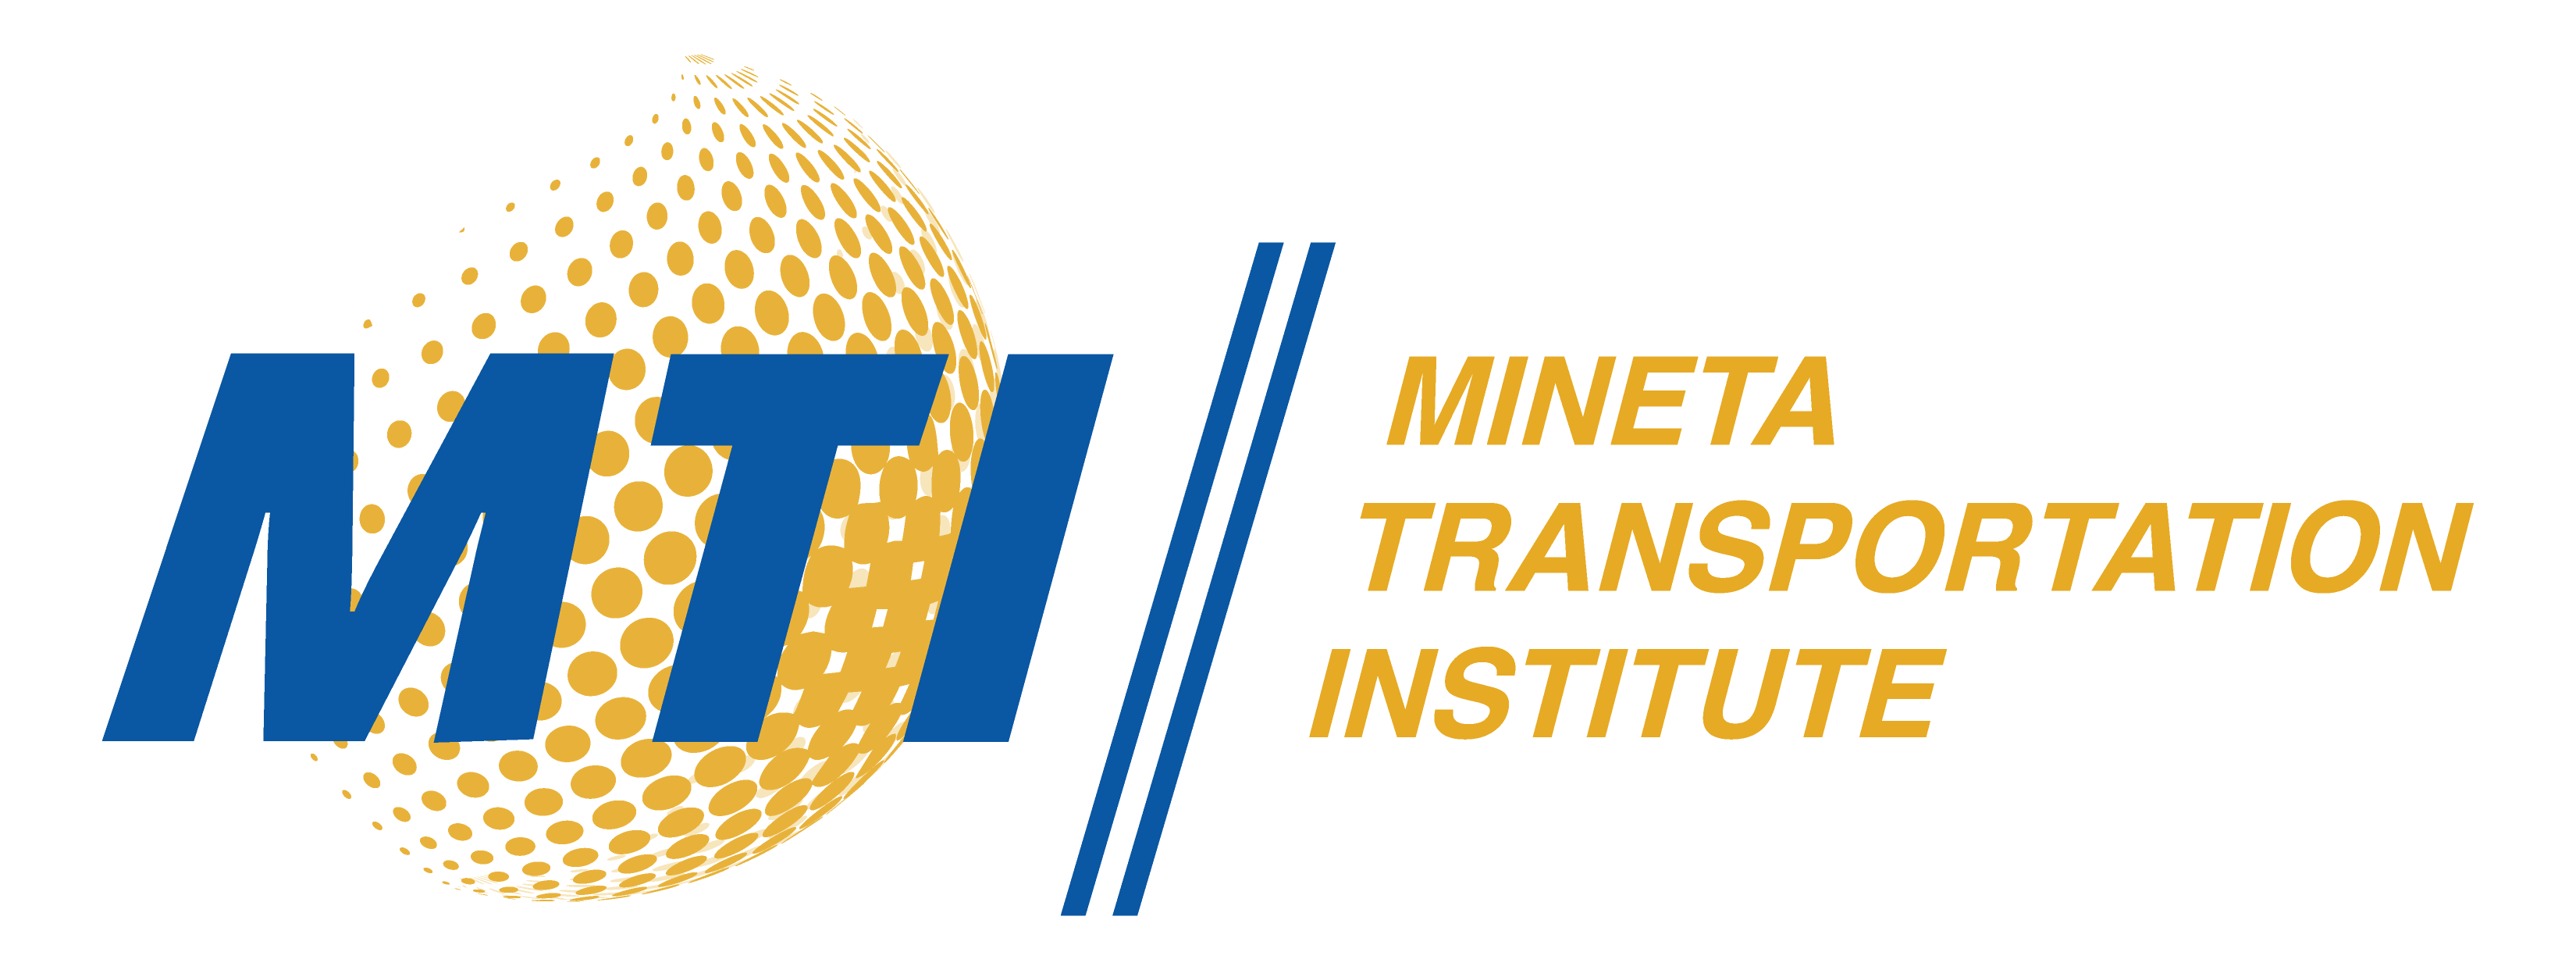 Mineta Transportation Institute Publications